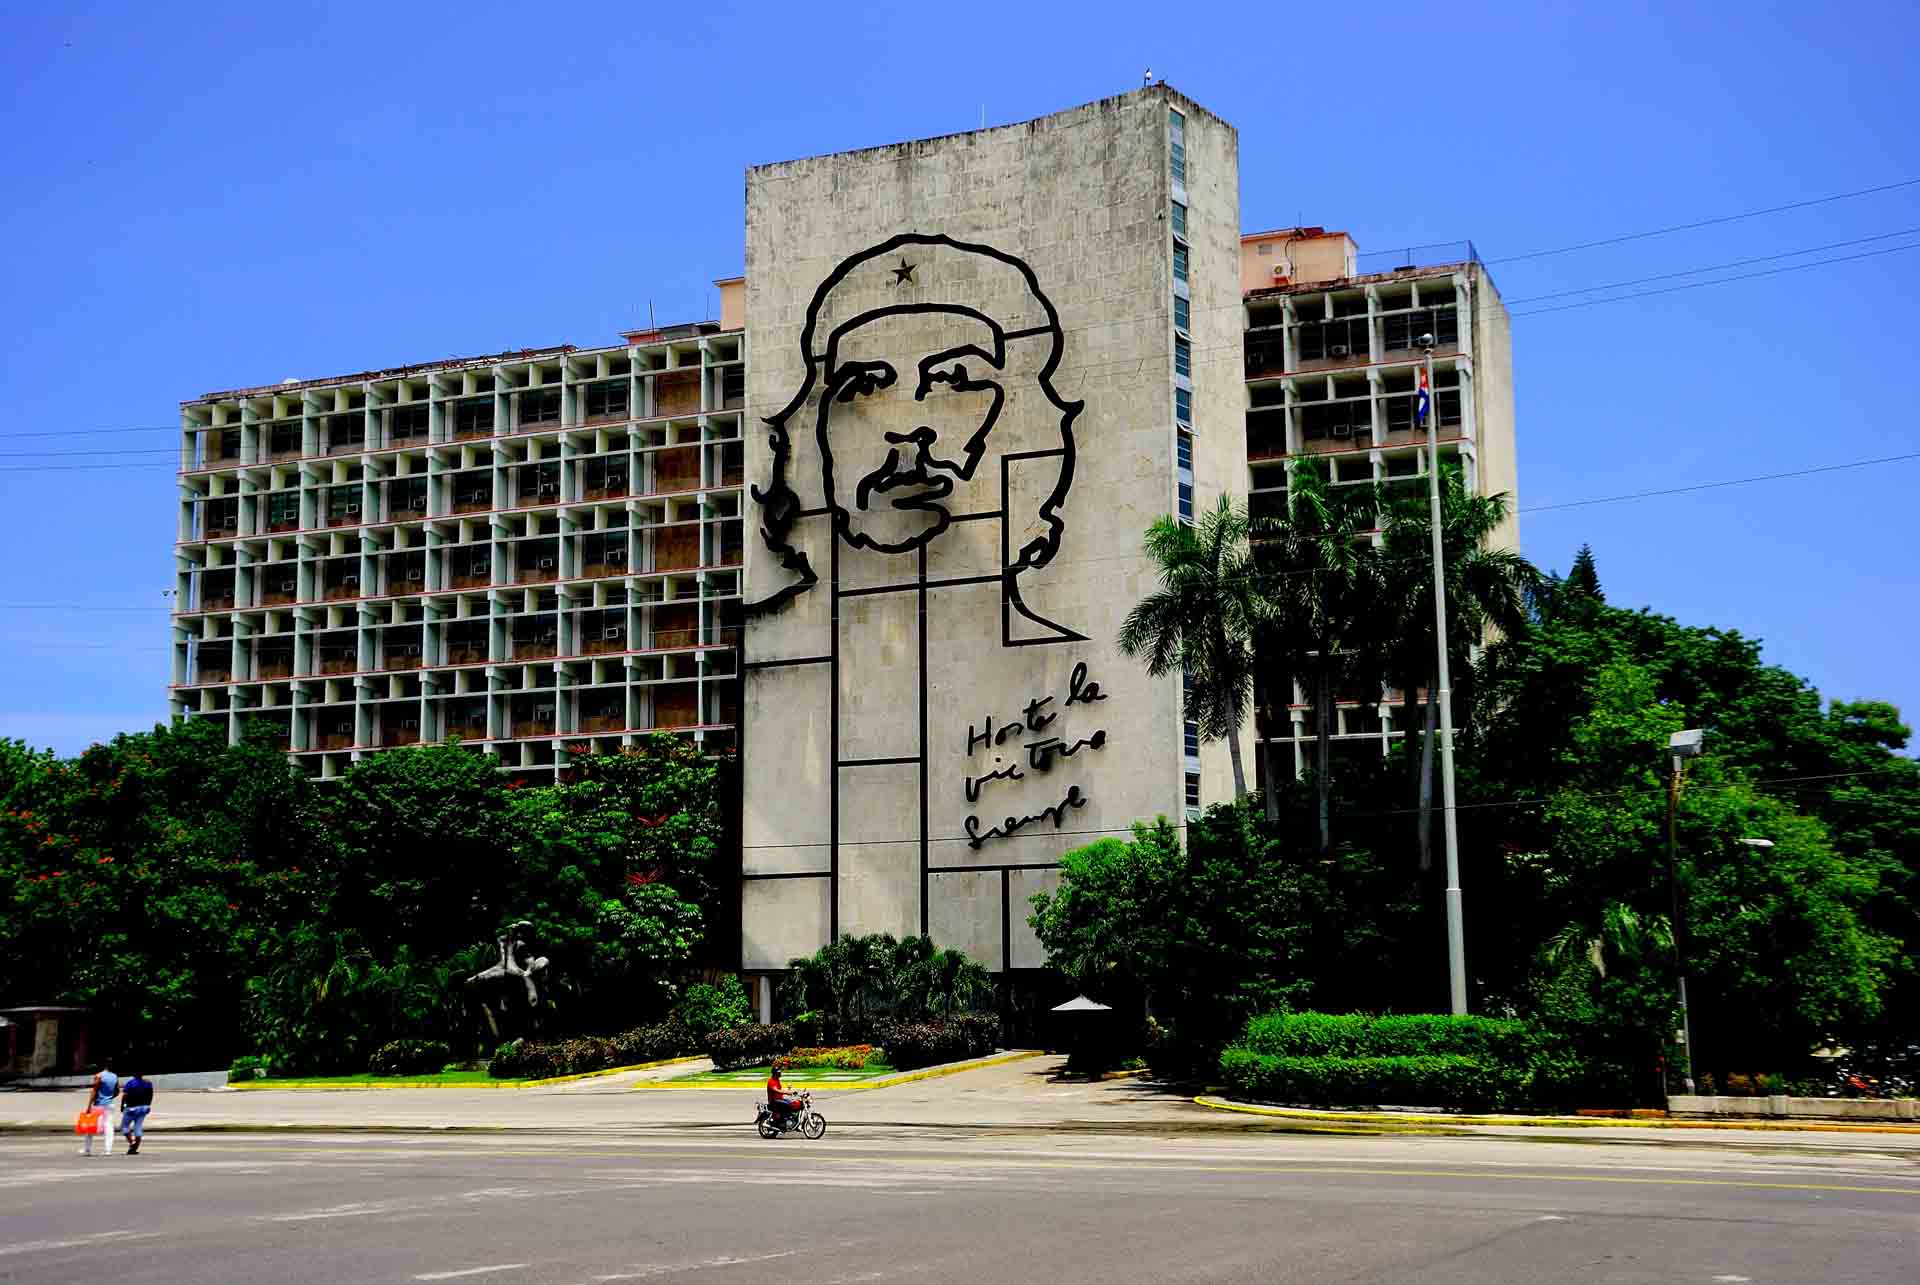 Placa de la Revolucion Havana Cuba, havana, cuba, pescart, photo blog, travel blog, blog, photo travel blog, enrico pescantini, pescantini